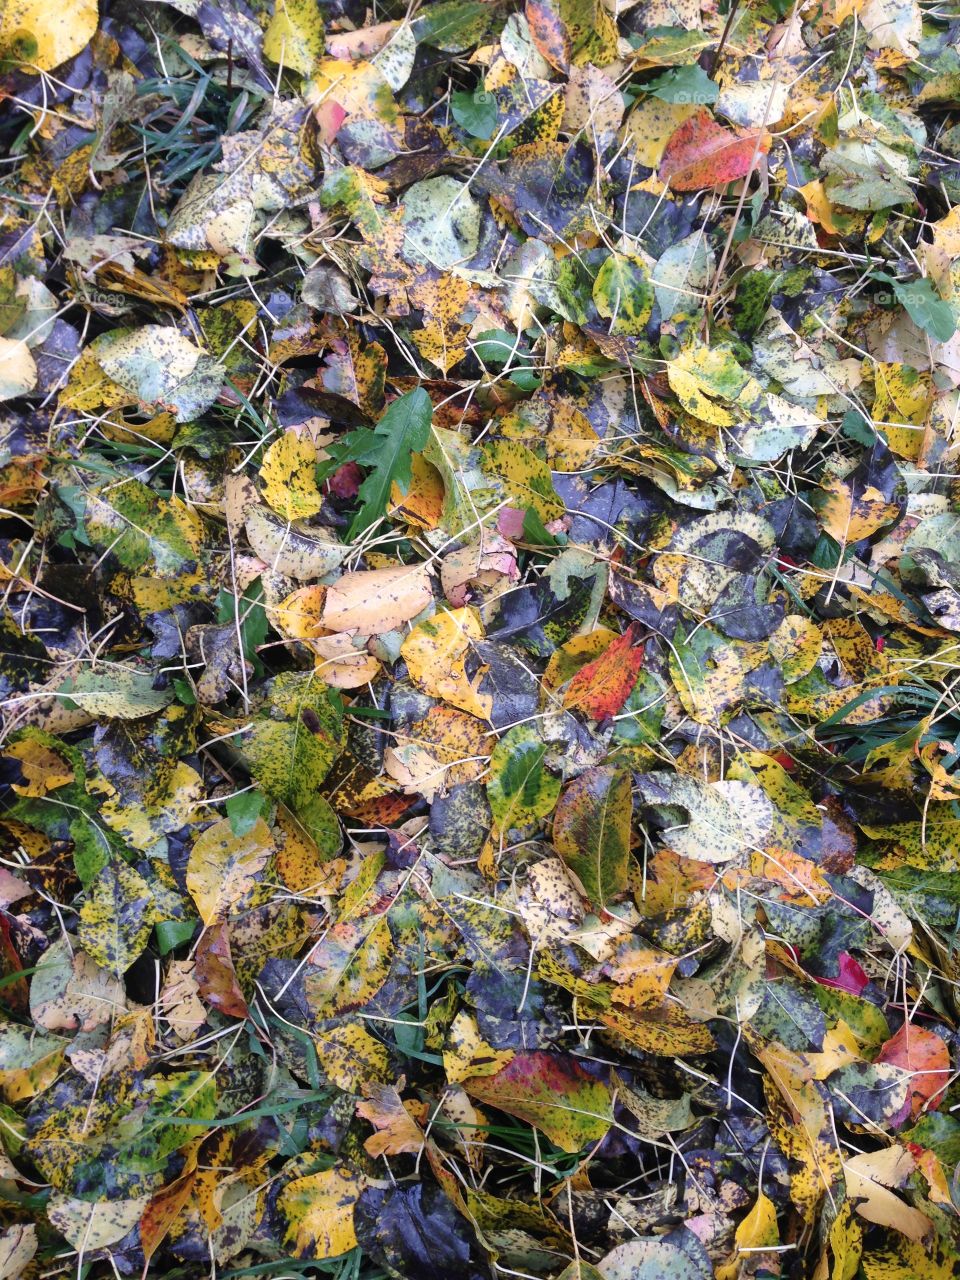 Carpet of fall!